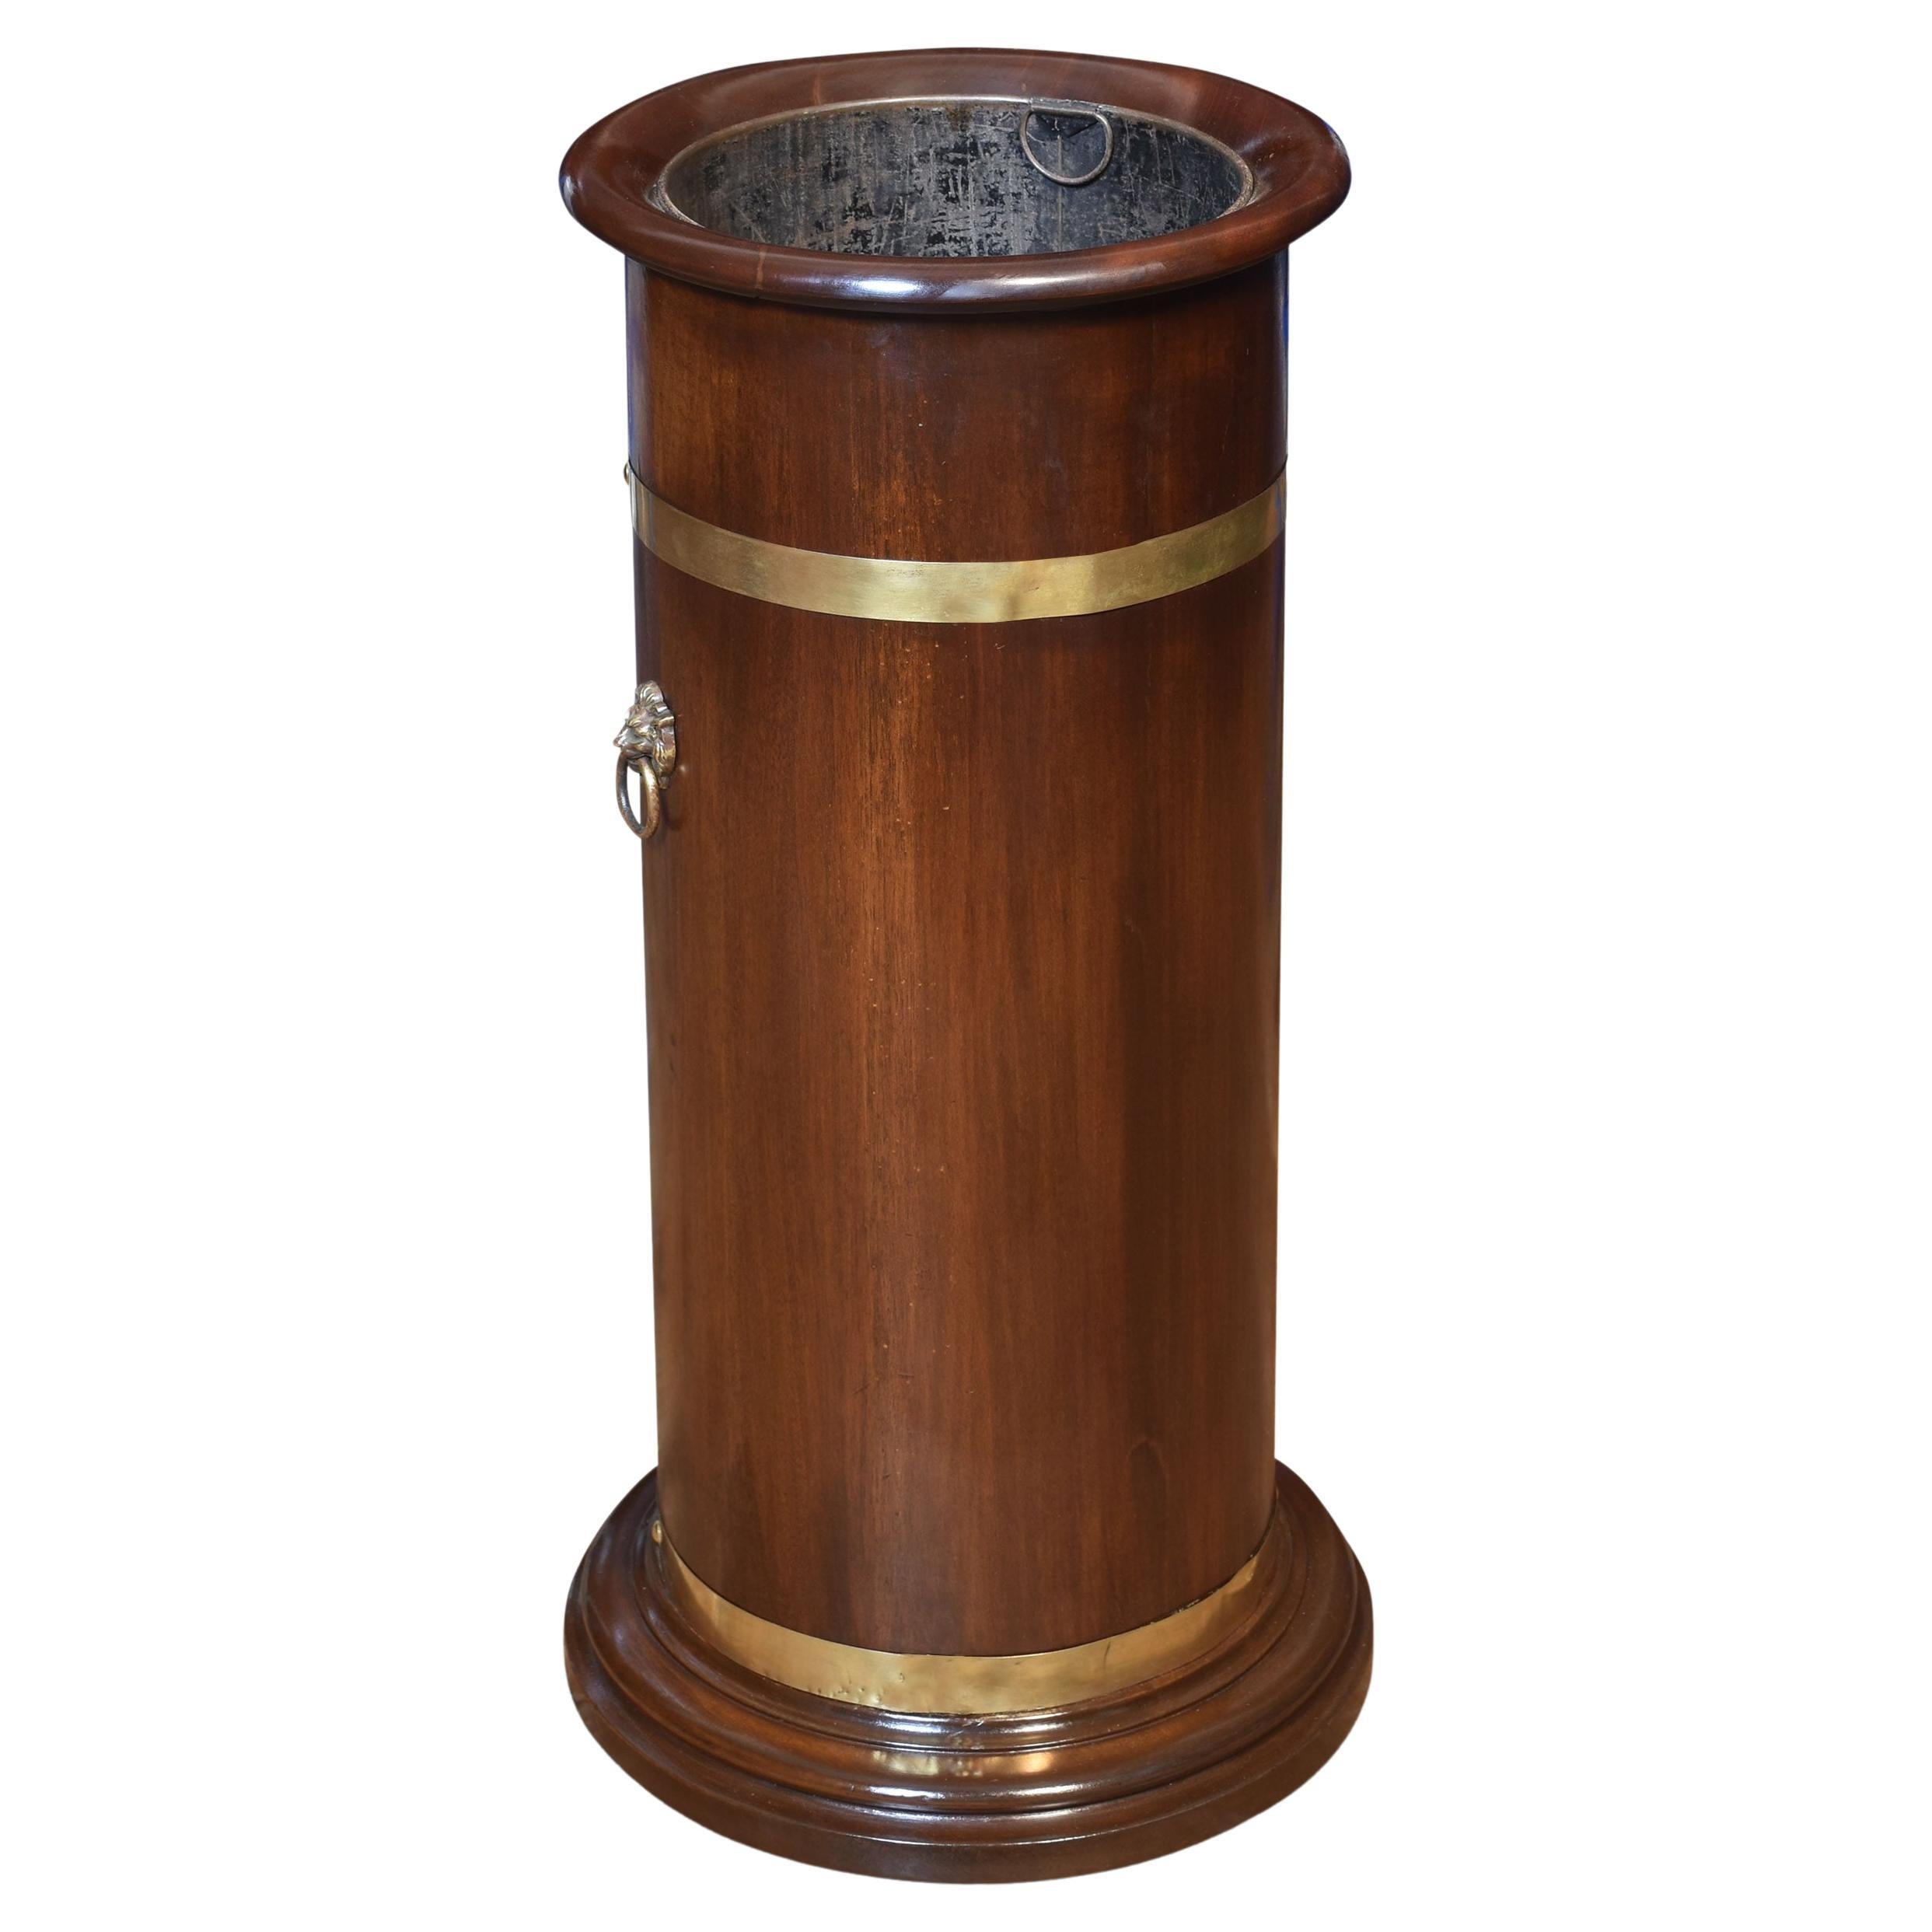 Brass bound barrel stick stand